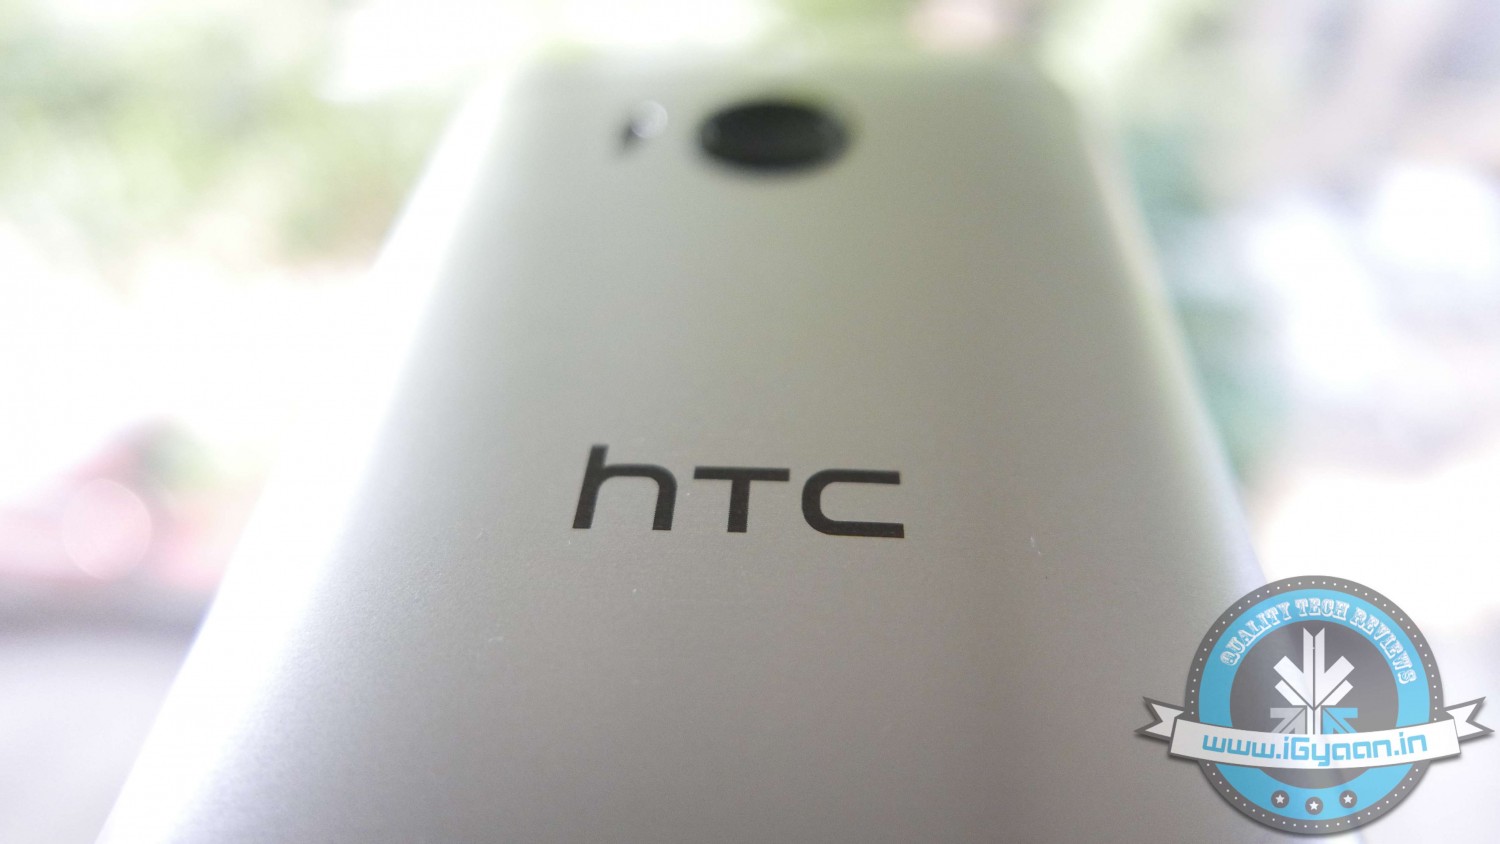 HTC One M9+ 4